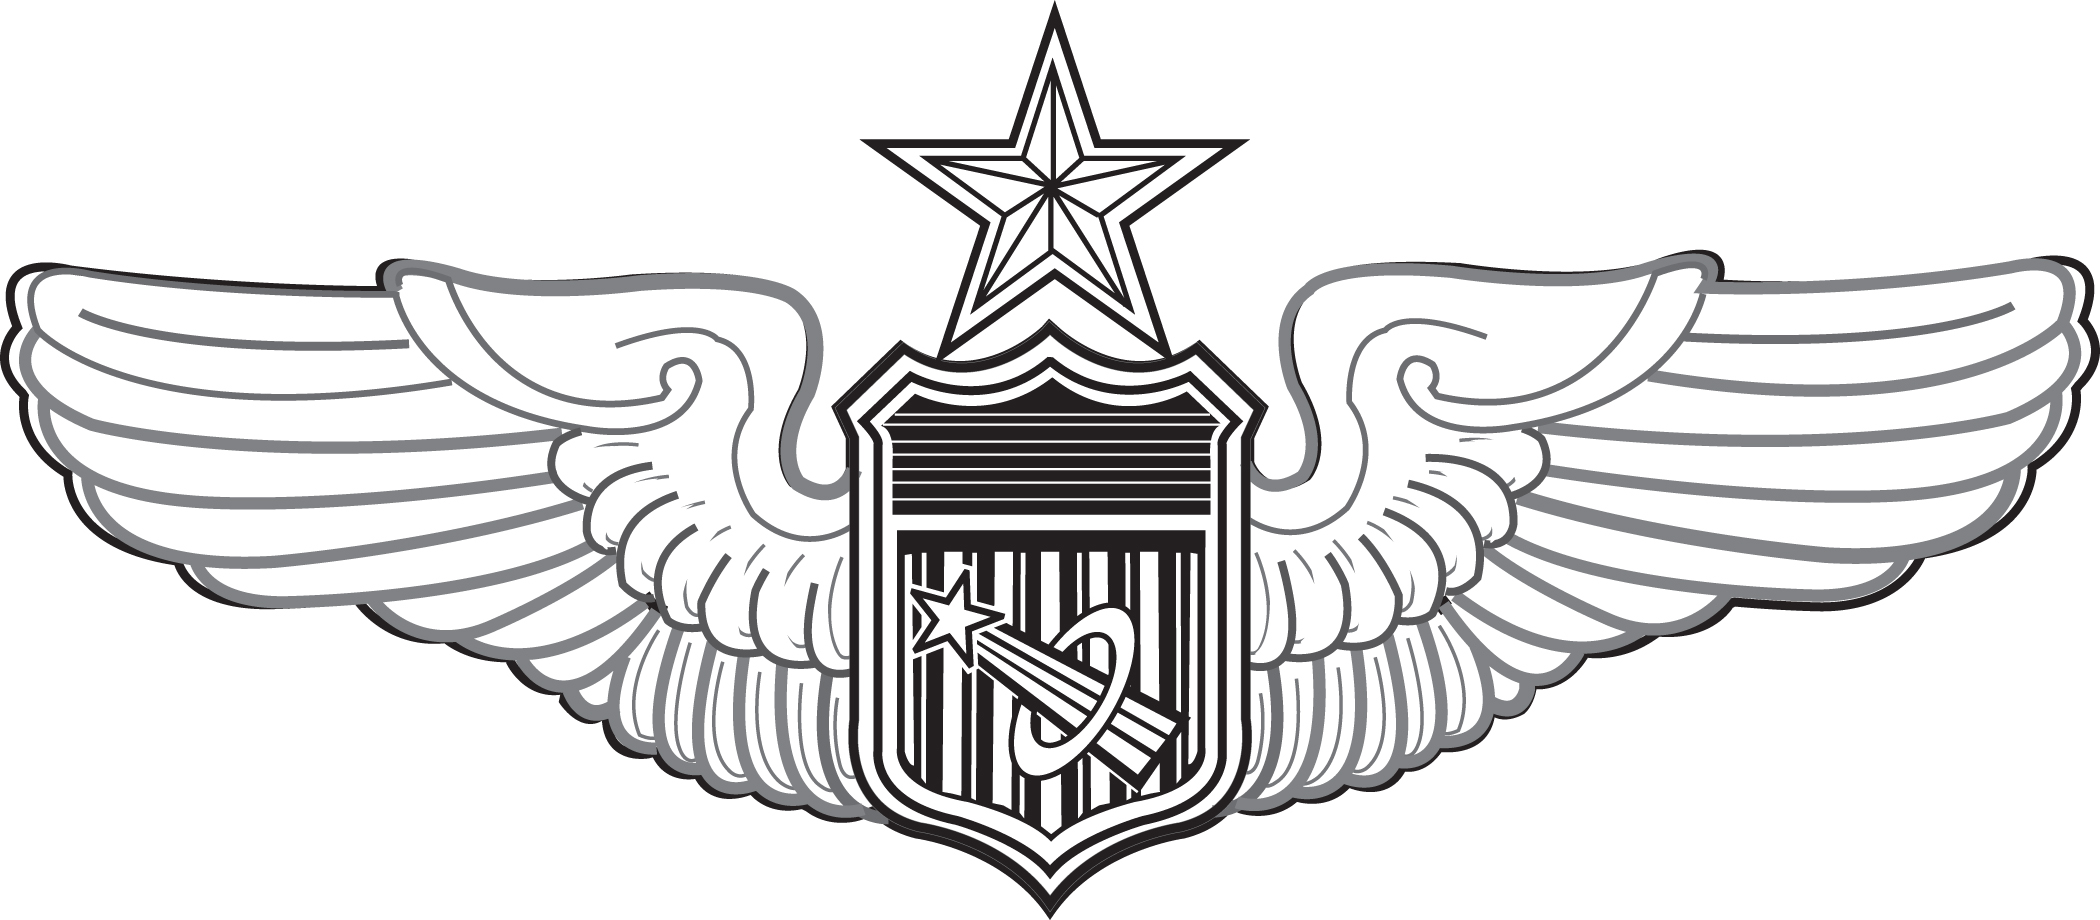 civilian astronaut badge